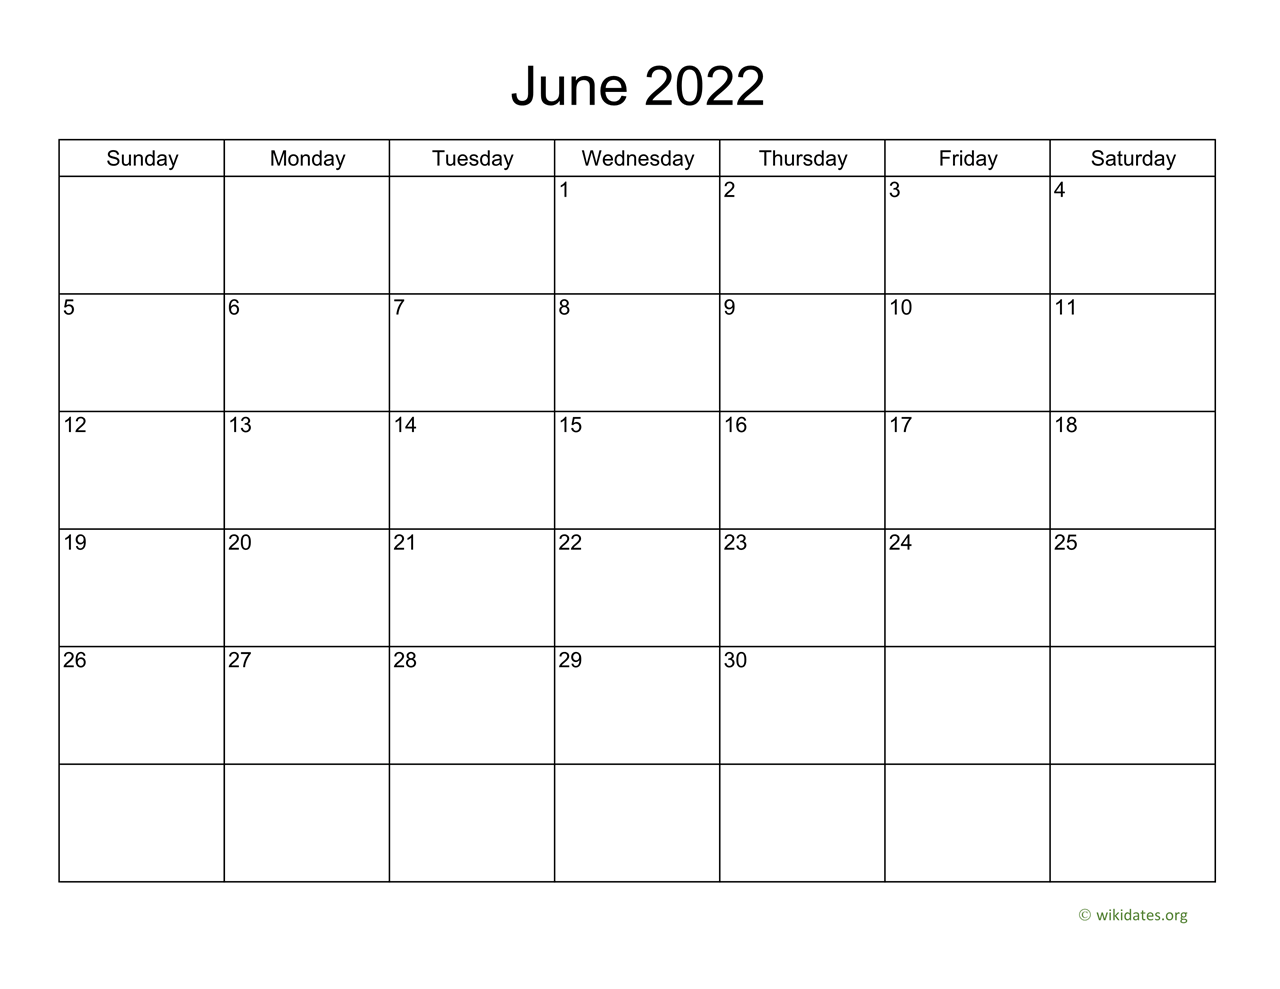 June 2022 Calendar Basic Calendar For June 2022 | Wikidates.org